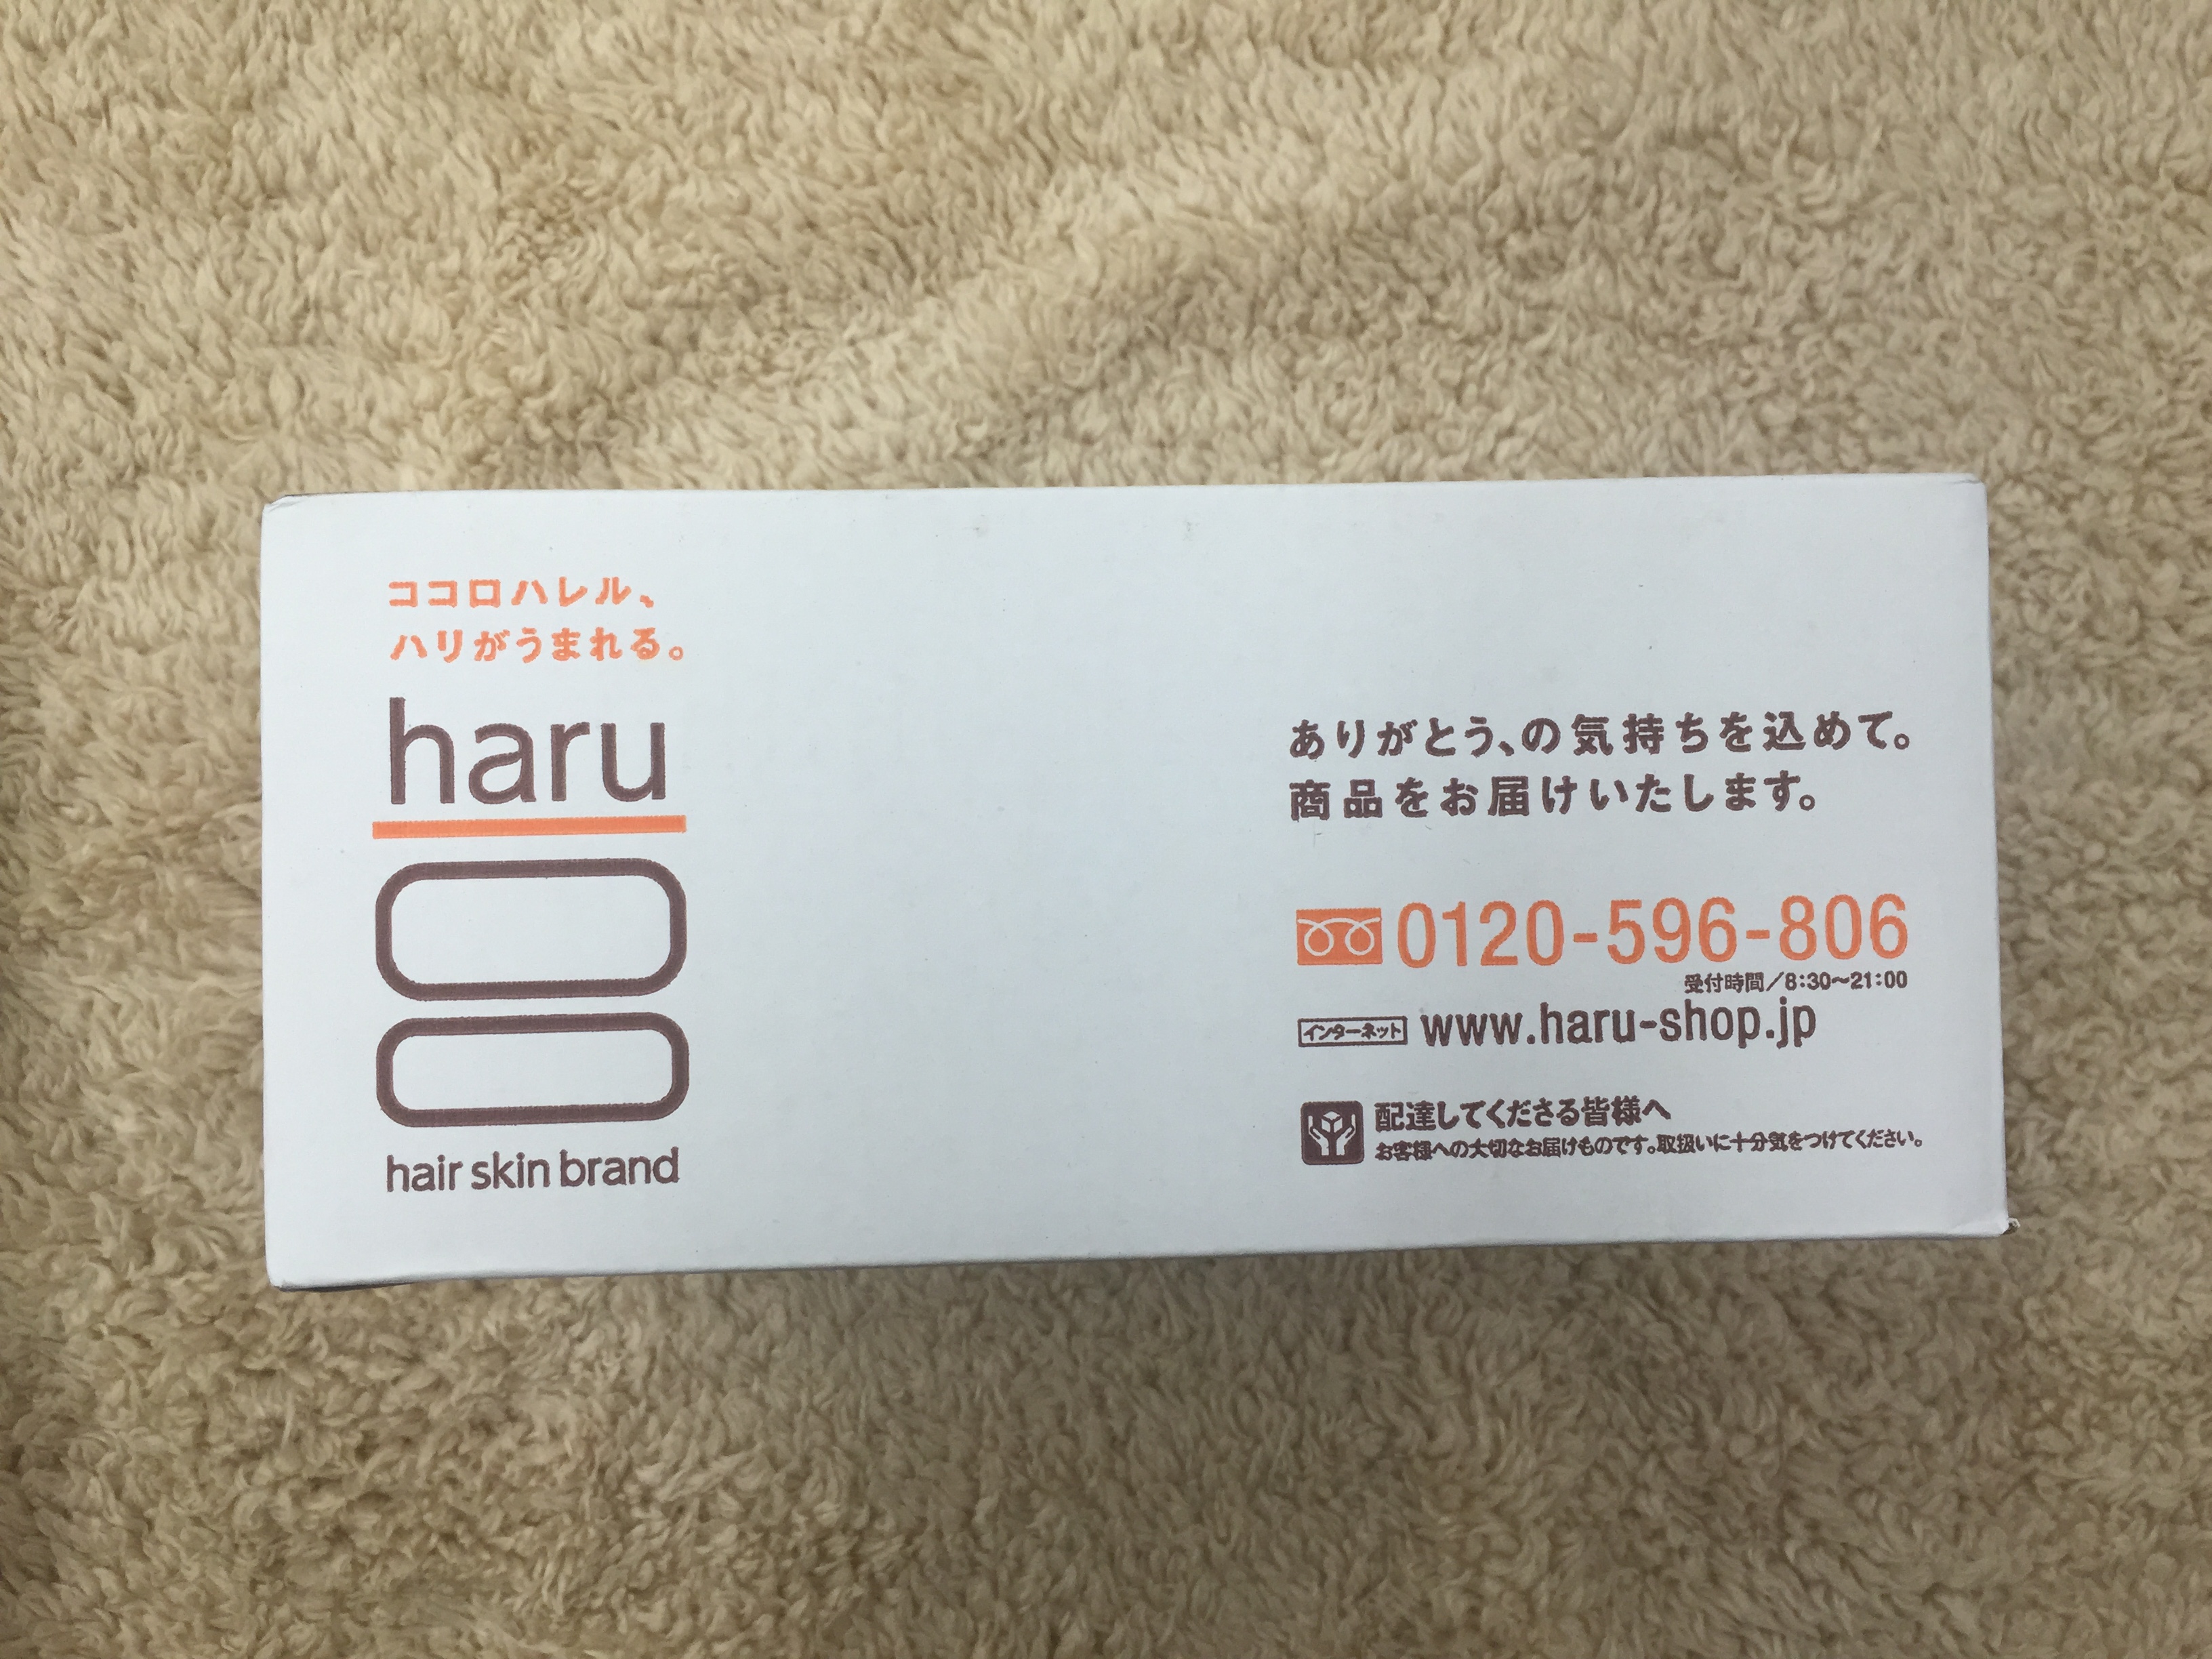 haru黒髪スカルプ・プロシャンプーの外箱